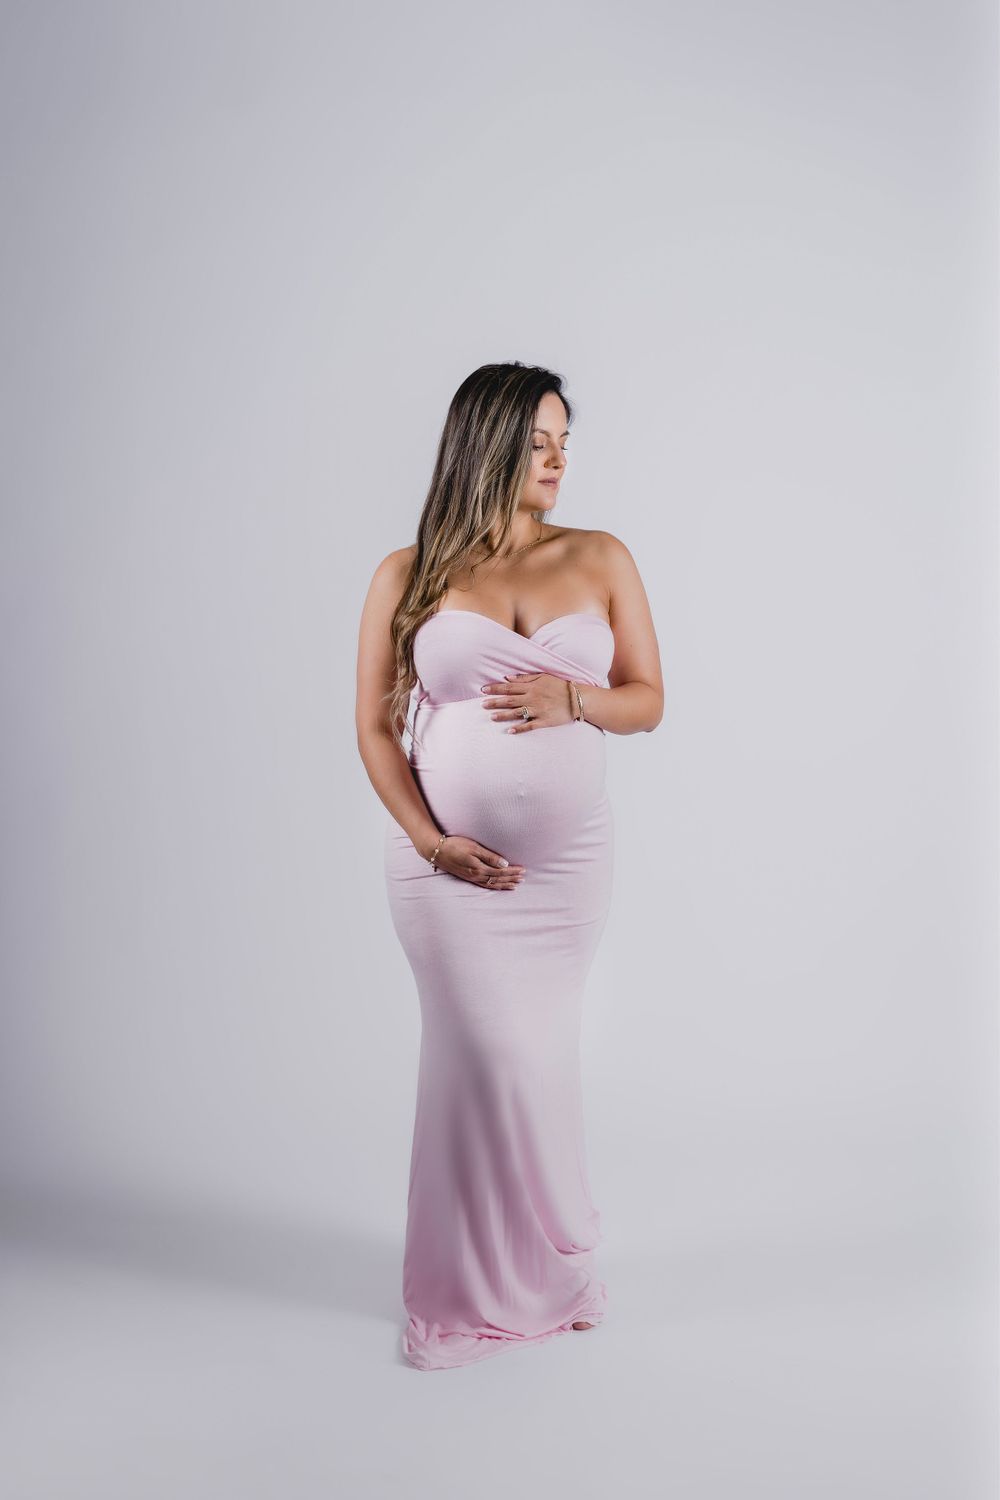 Maternity photography, Jacksonville FL, Carolennys Studios, Fine Art Maternity Photography, Studio Photography, pink fitted maternity dress